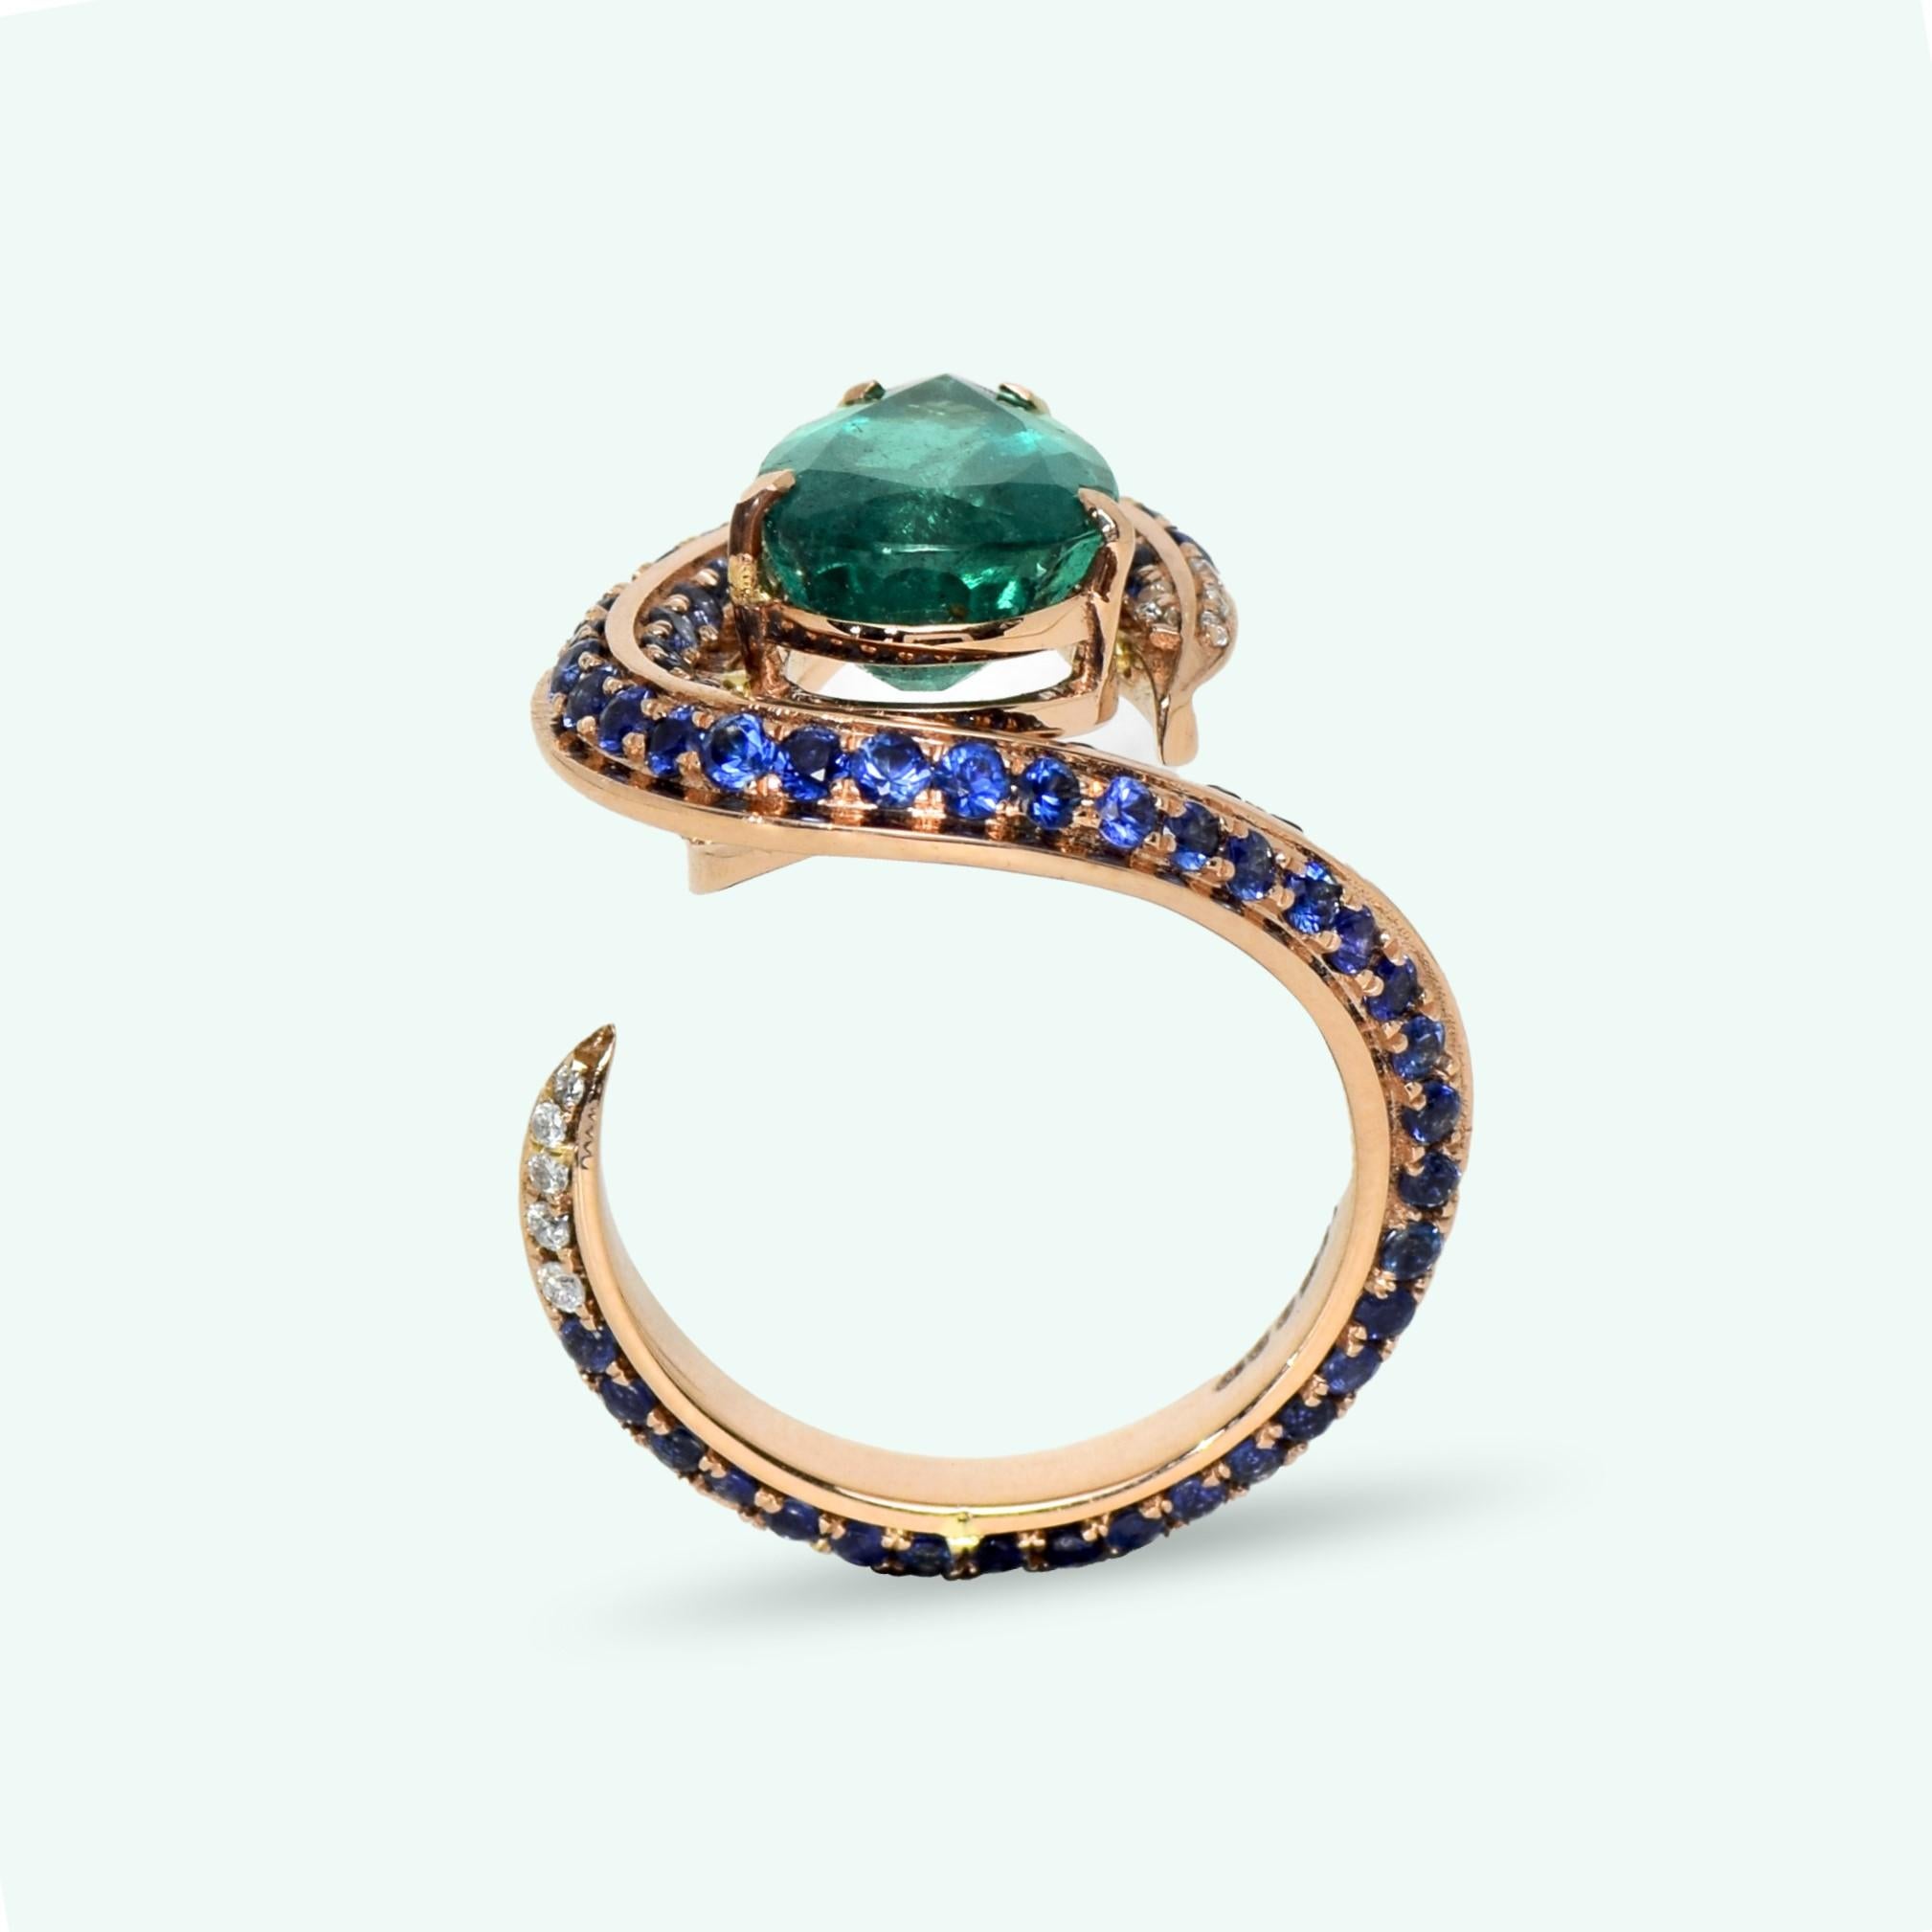 Contemporary IGI 18k 3.61 ct Vivid Emerald and Diamond Antique Art Deco Style Engagement Ring